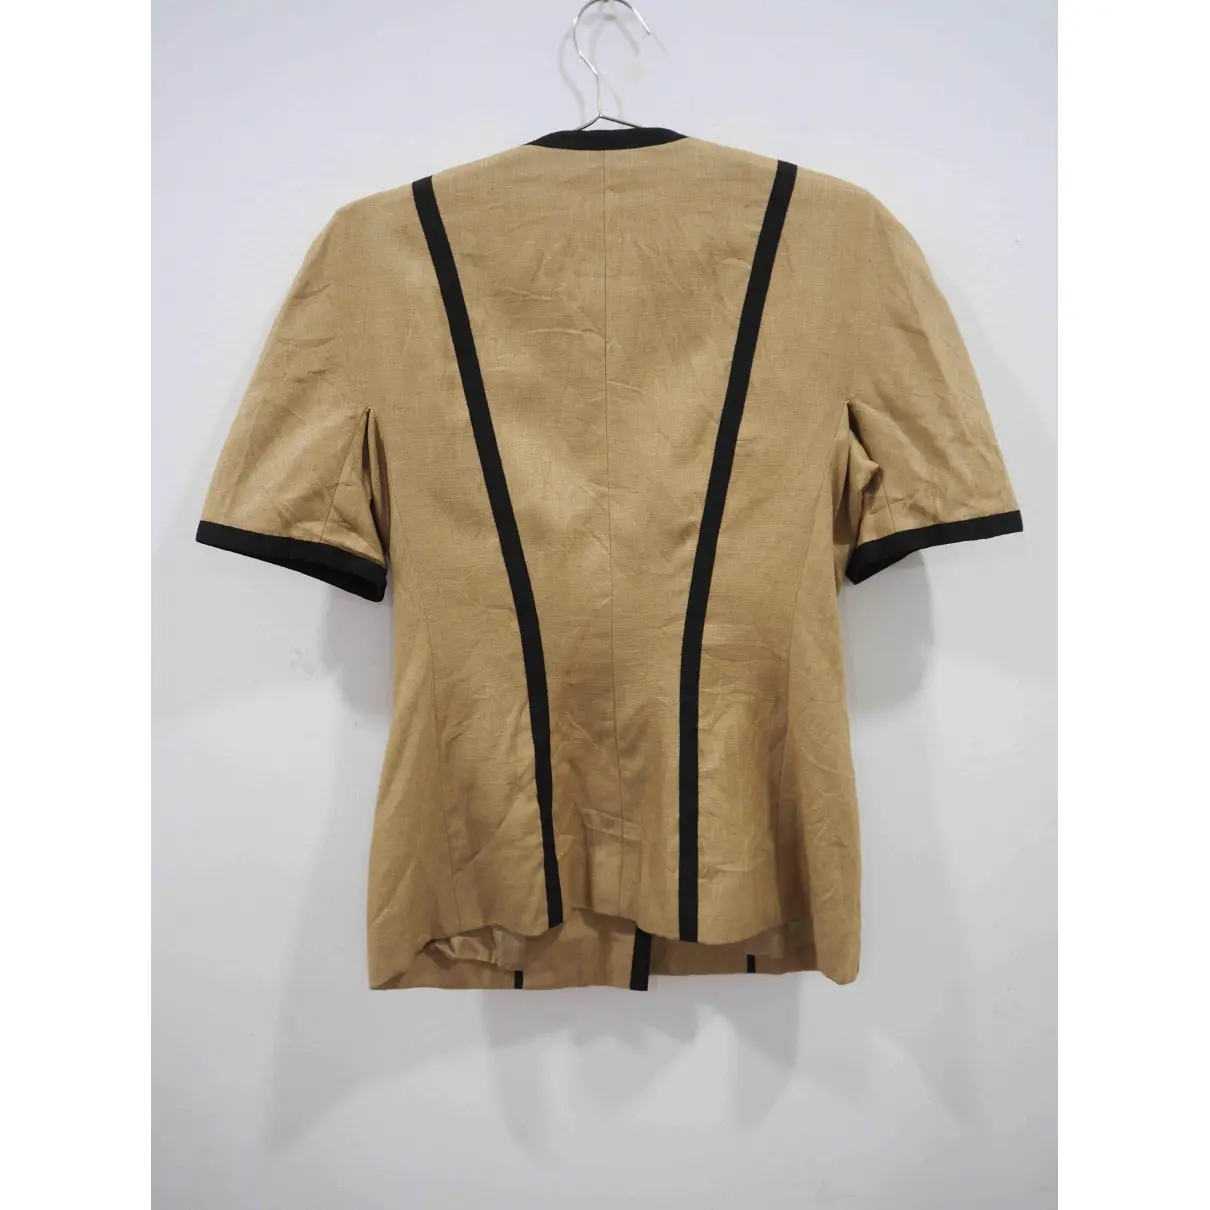 Buy Chanel Linen blouse online - Vintage